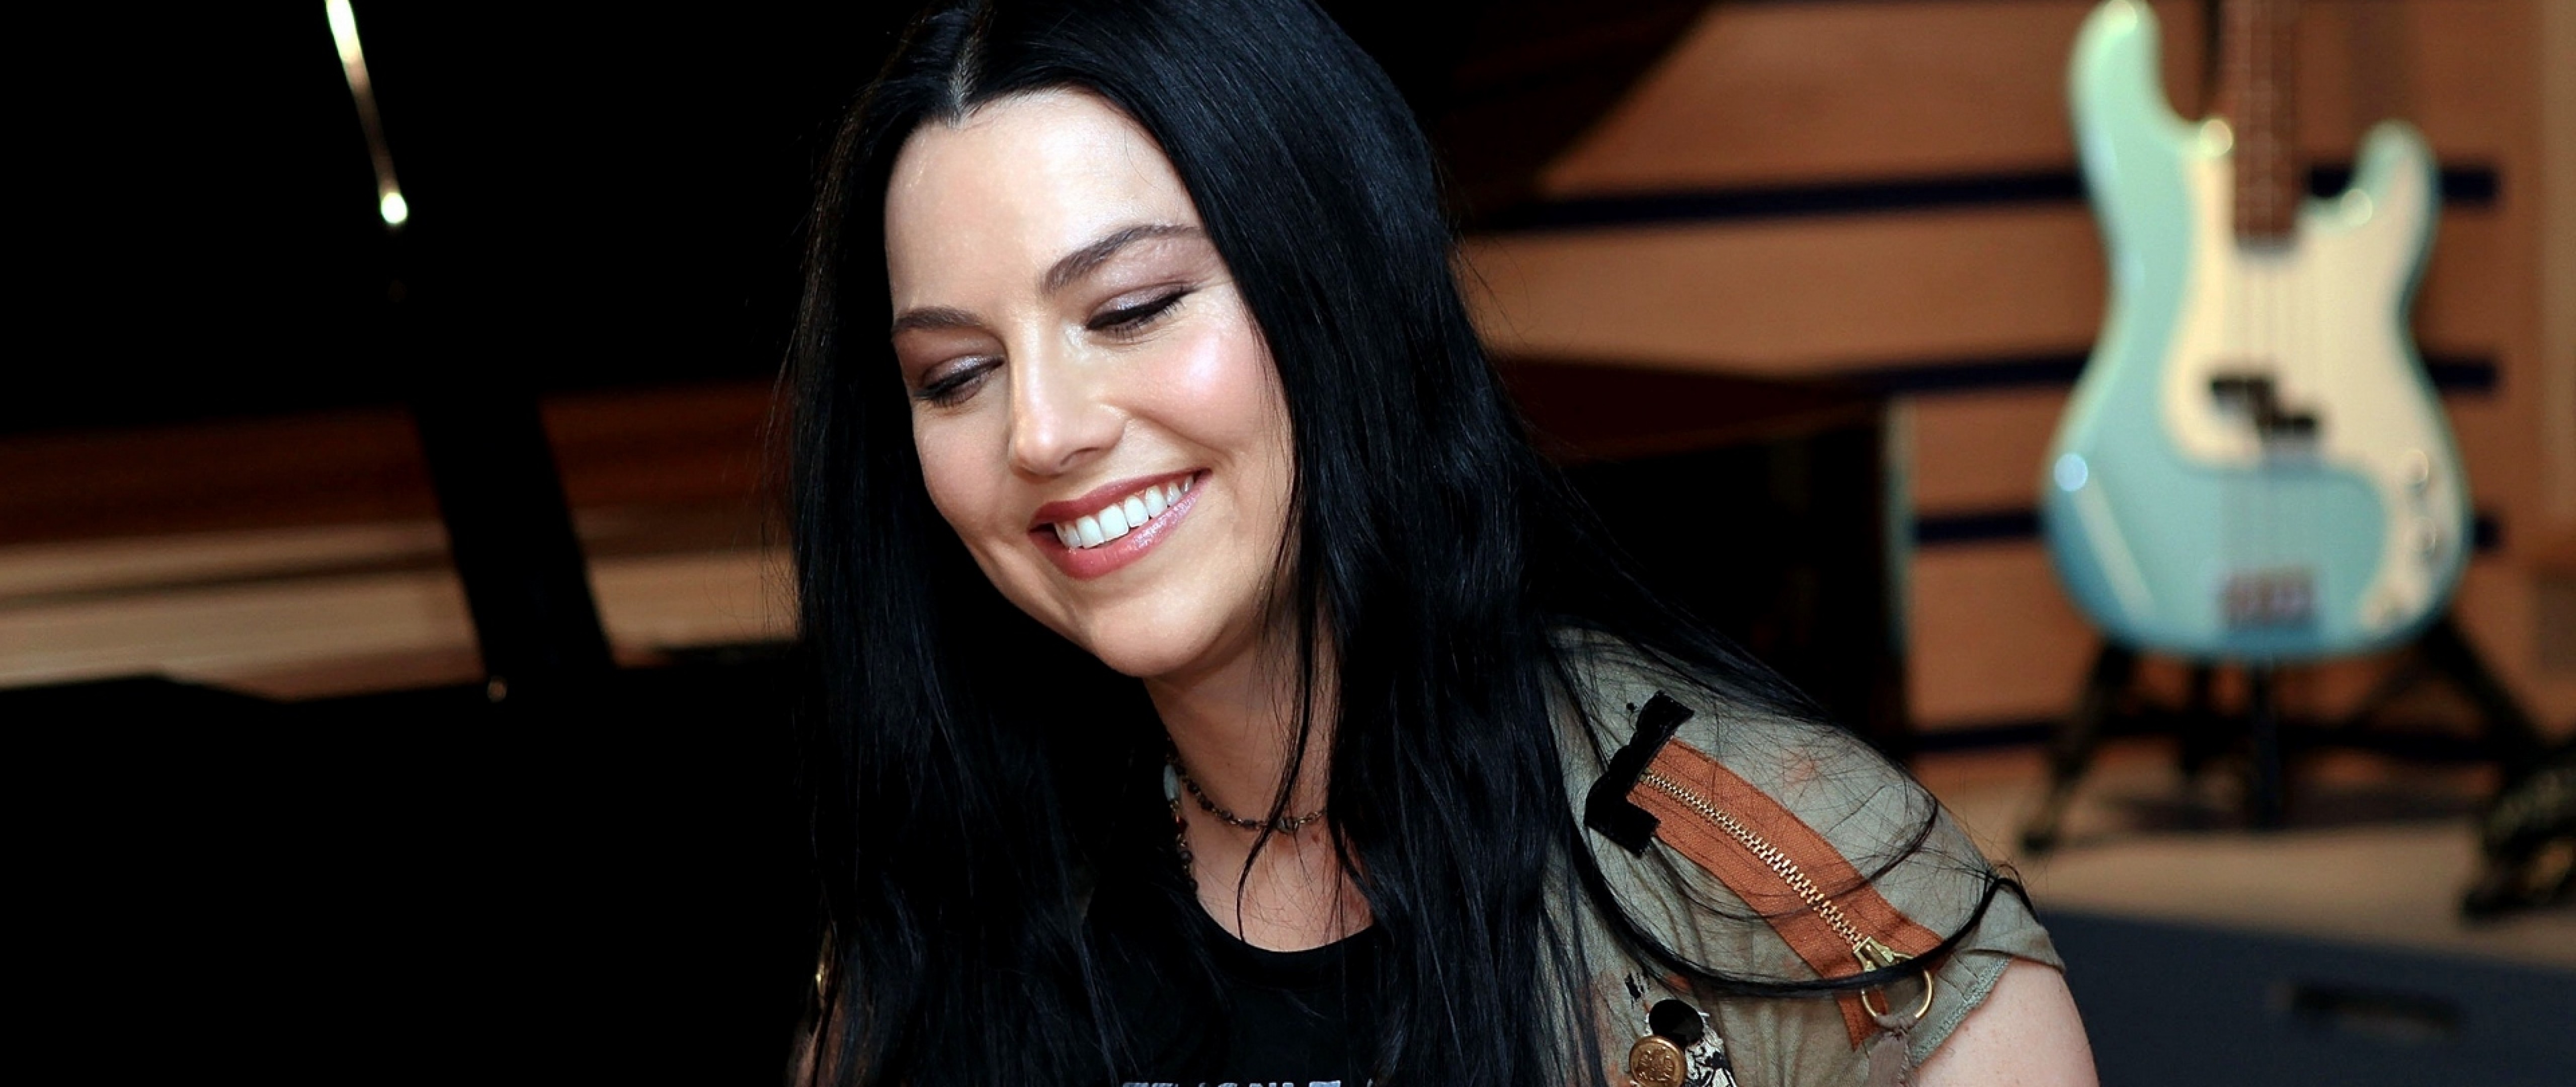 Amy Lee Evanescence HD Wallpaper